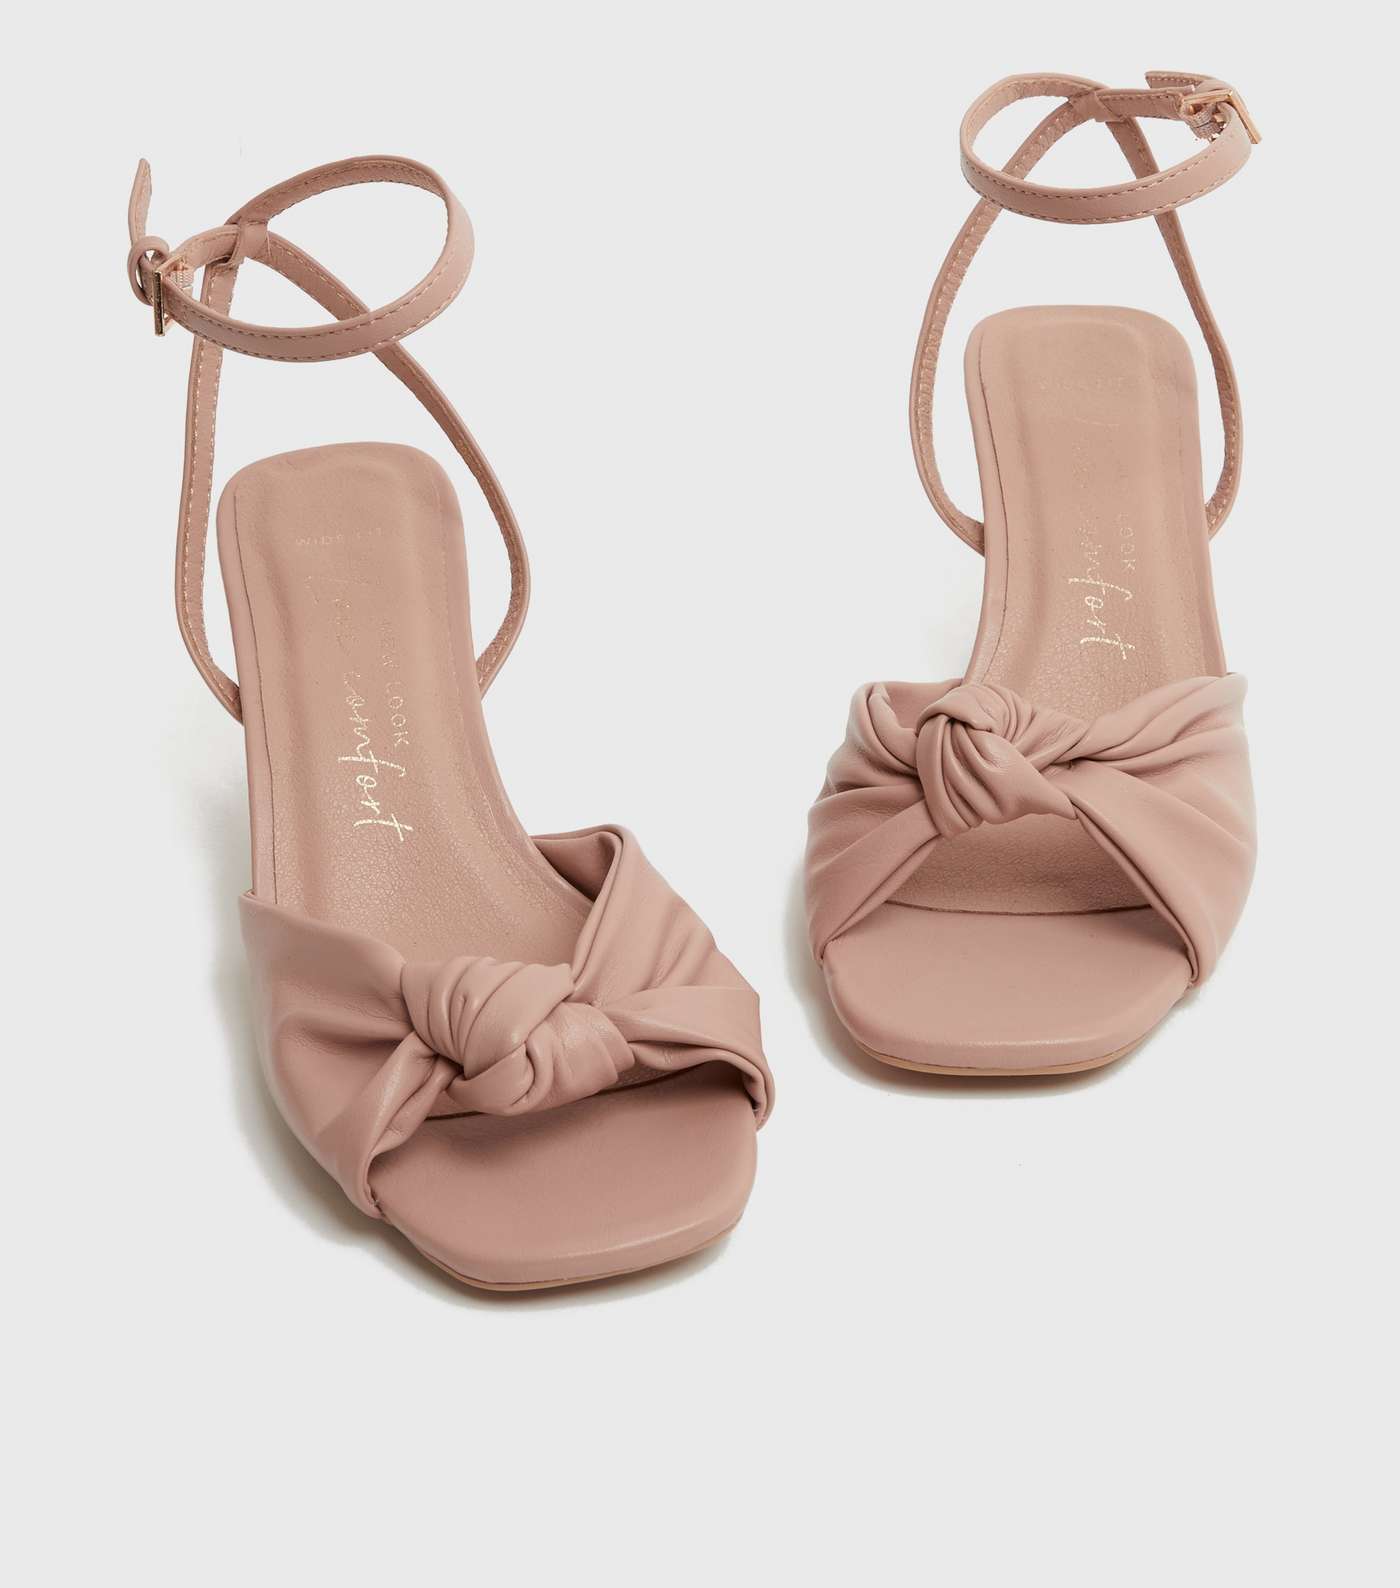 Wide Fit Pale Pink 2 Part Knot Square Toe Stiletto Heel Sandals Image 3